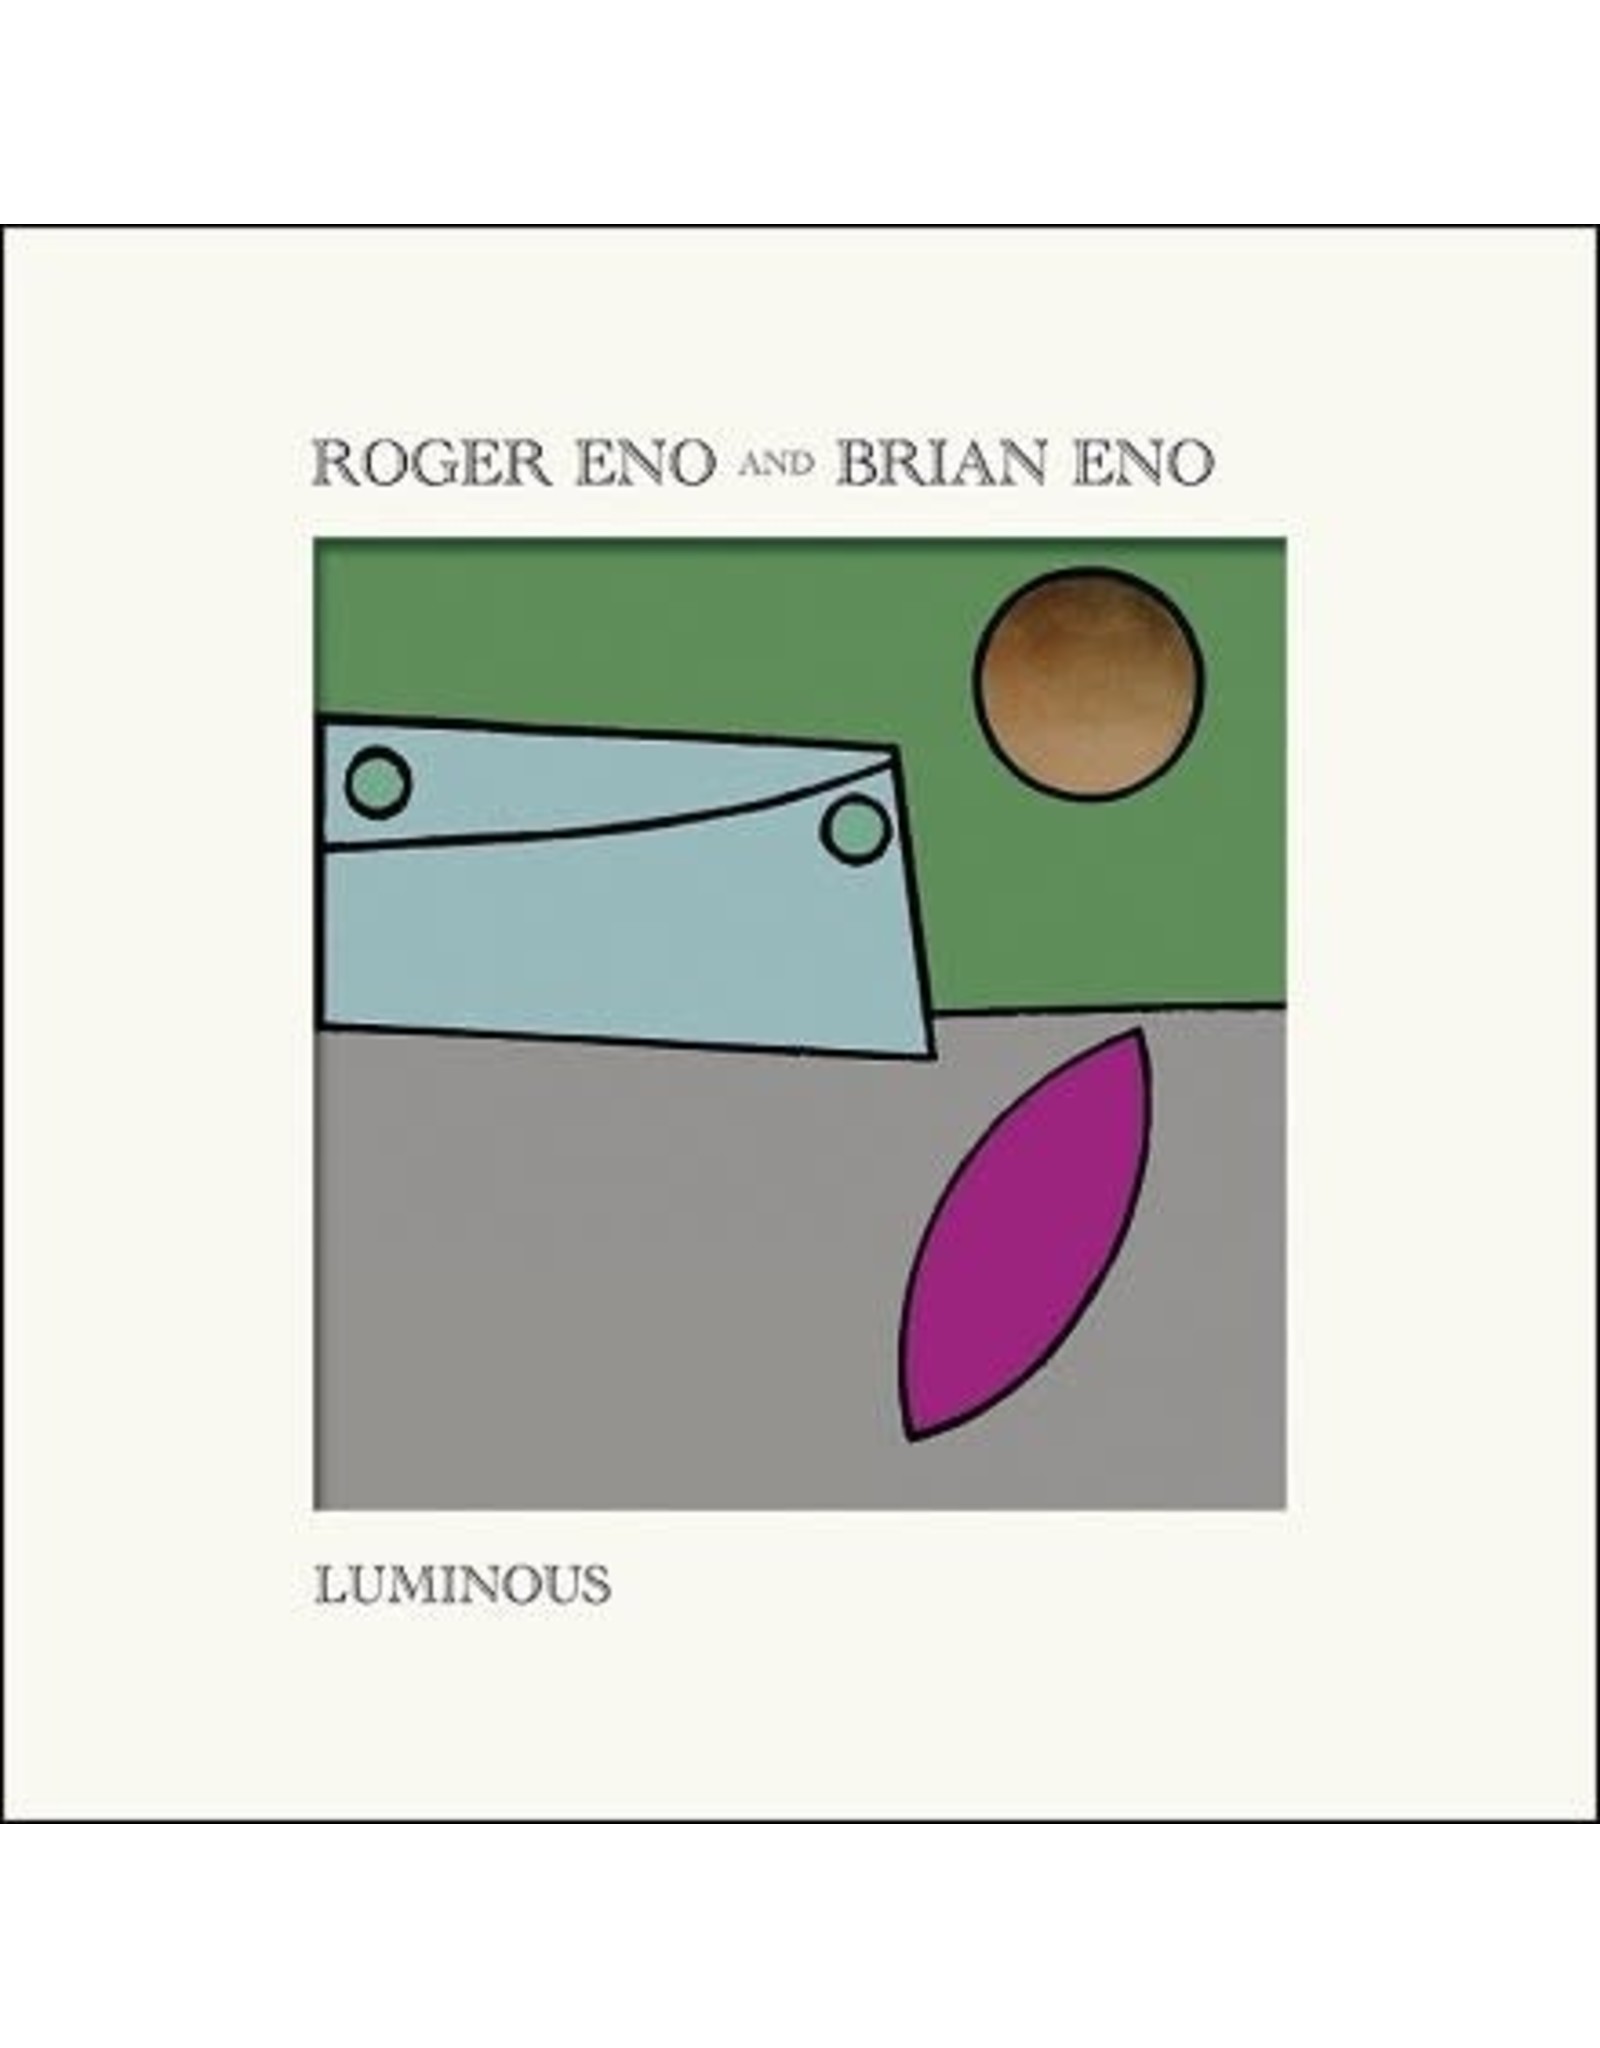 Deutsche Grammophon Eno, Roger & Brian Eno: Luminous (yellow vinyl indie shop version) LP